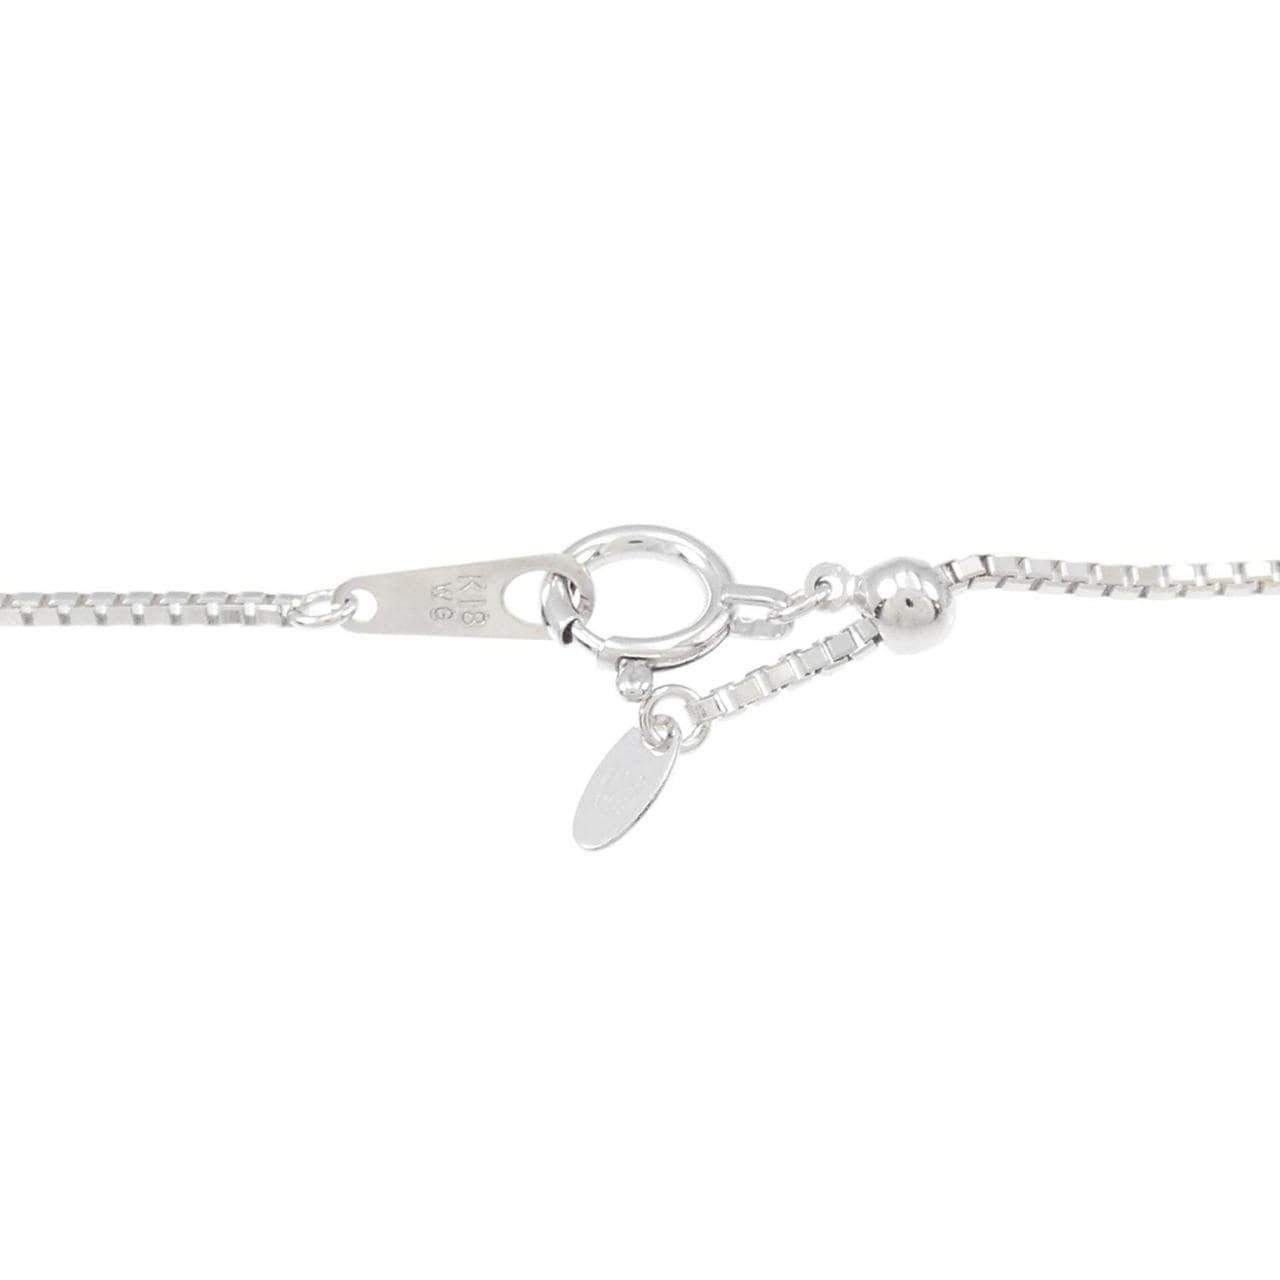 K18WG sapphire necklace 2.50CT